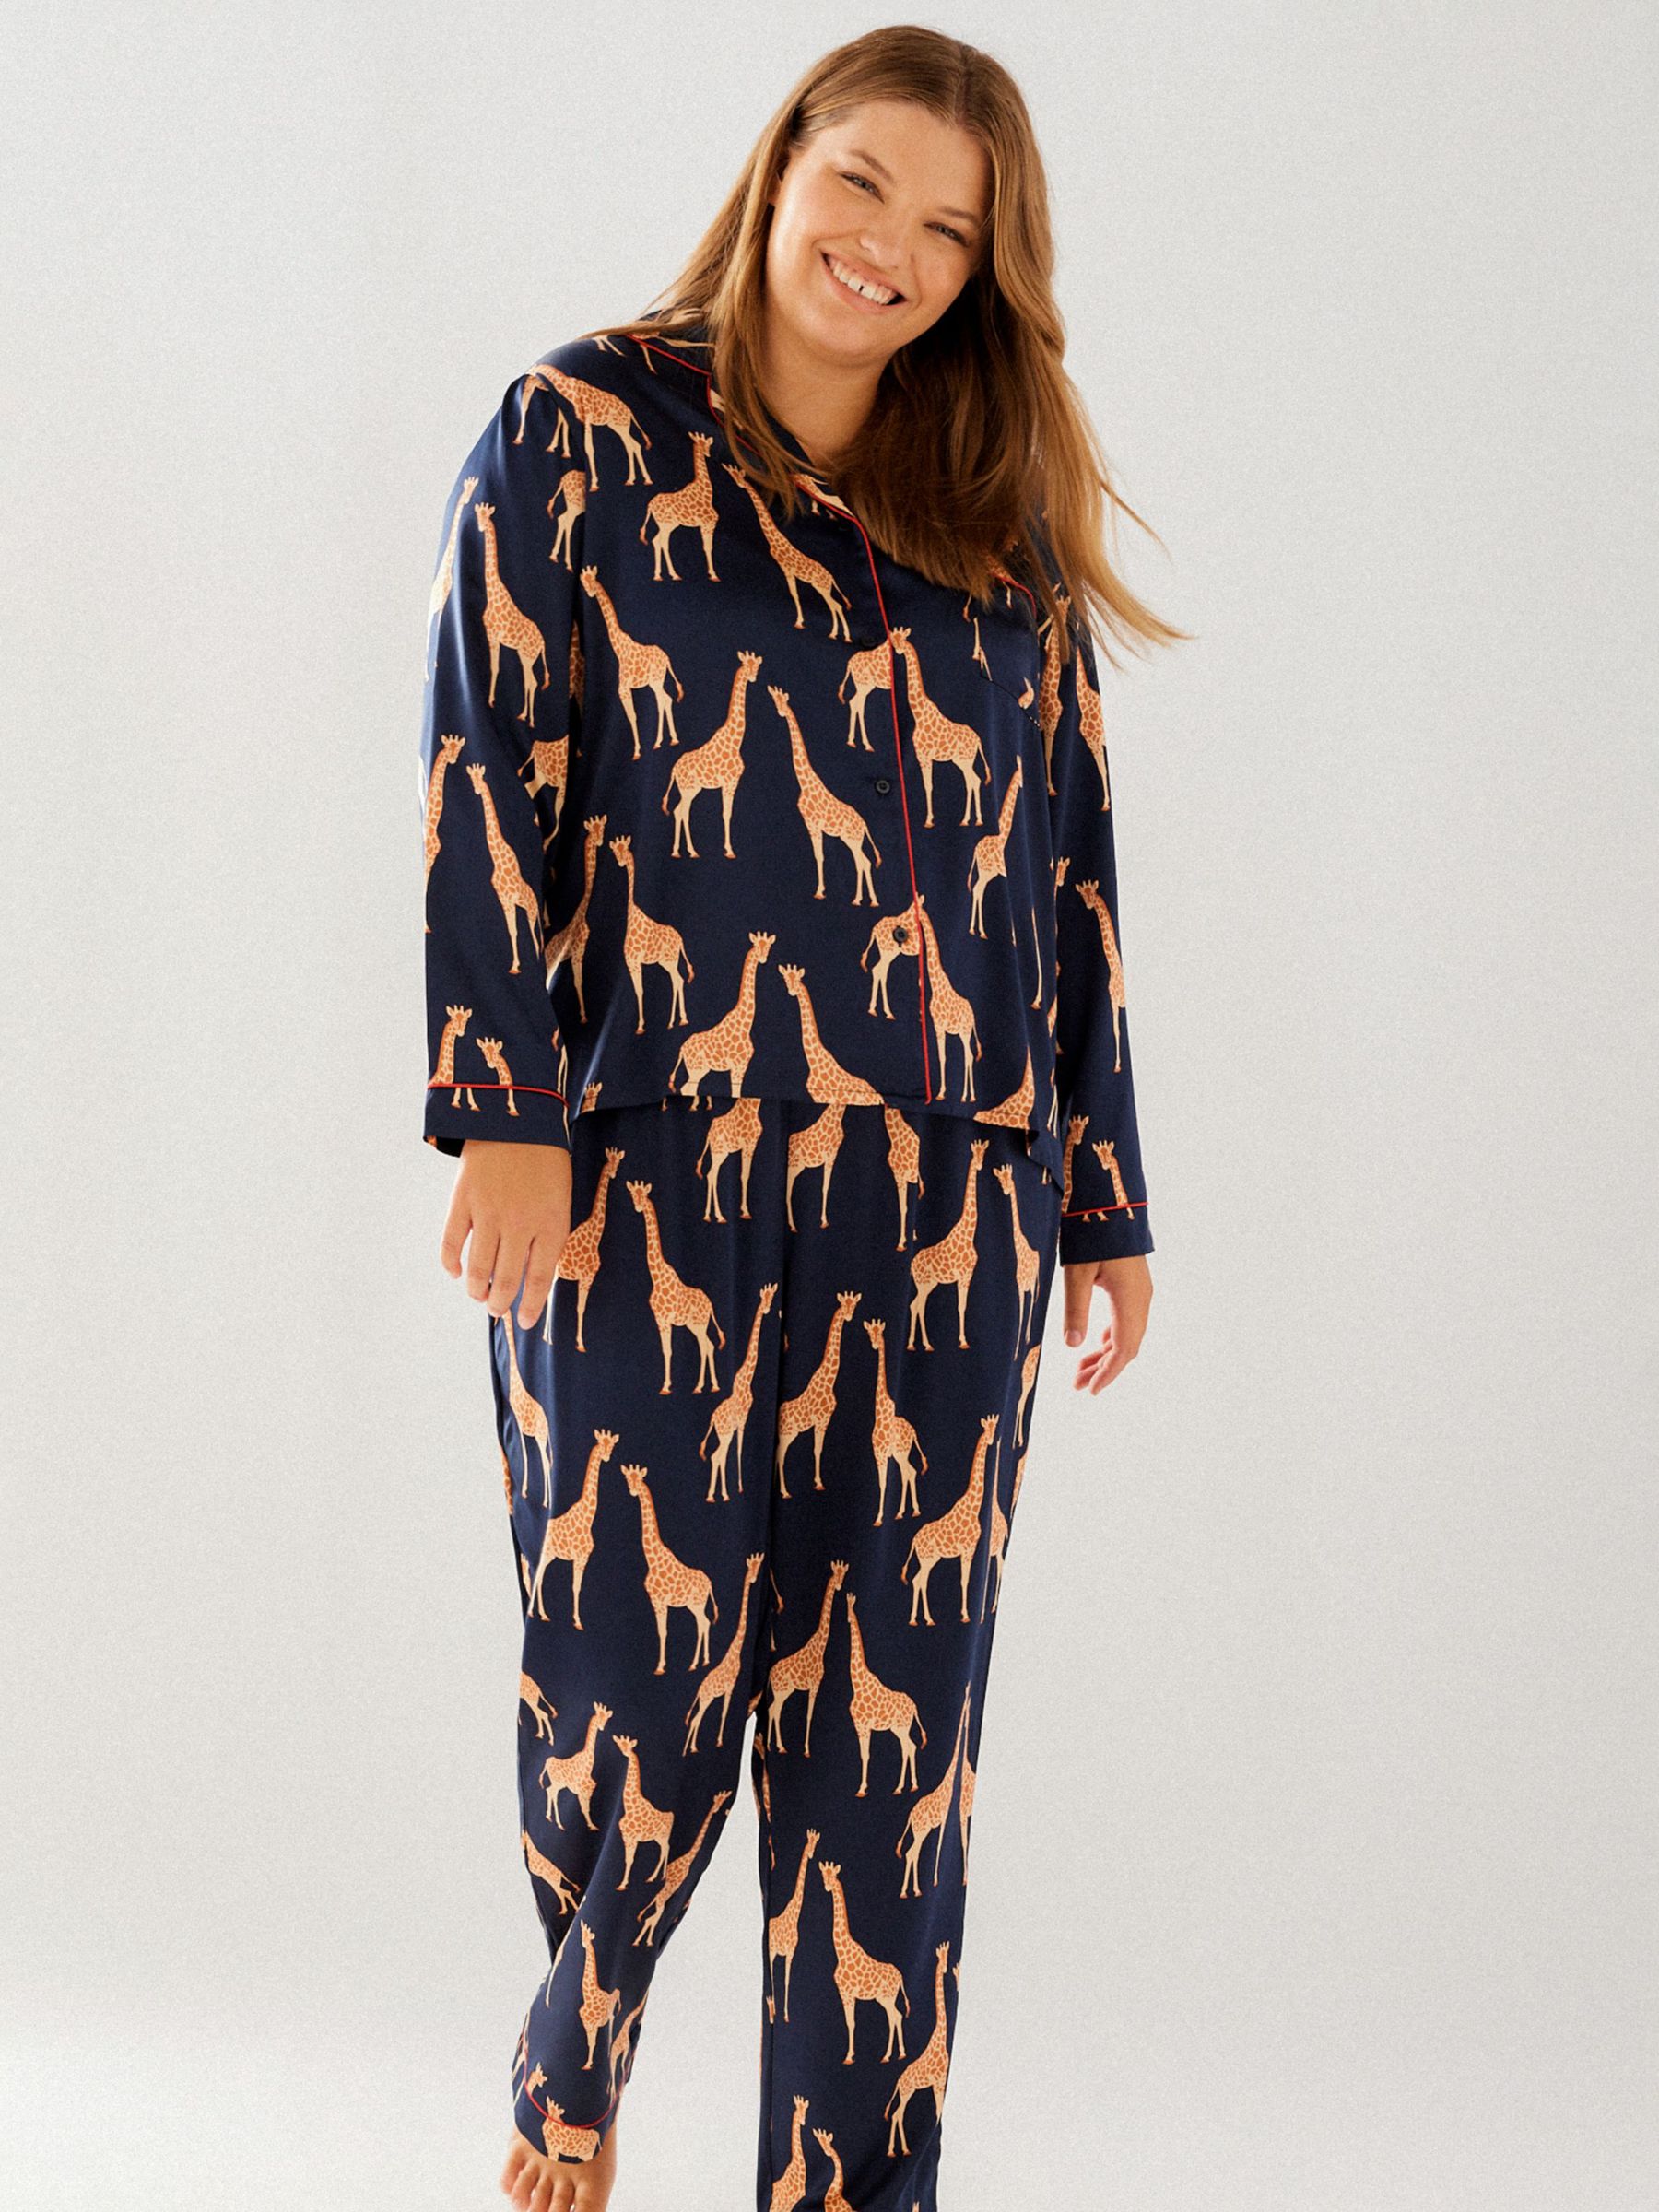 Buy Chelsea Peers Curve Satin Giraffe Print Long Pyjama Set, Navy/Multi Online at johnlewis.com